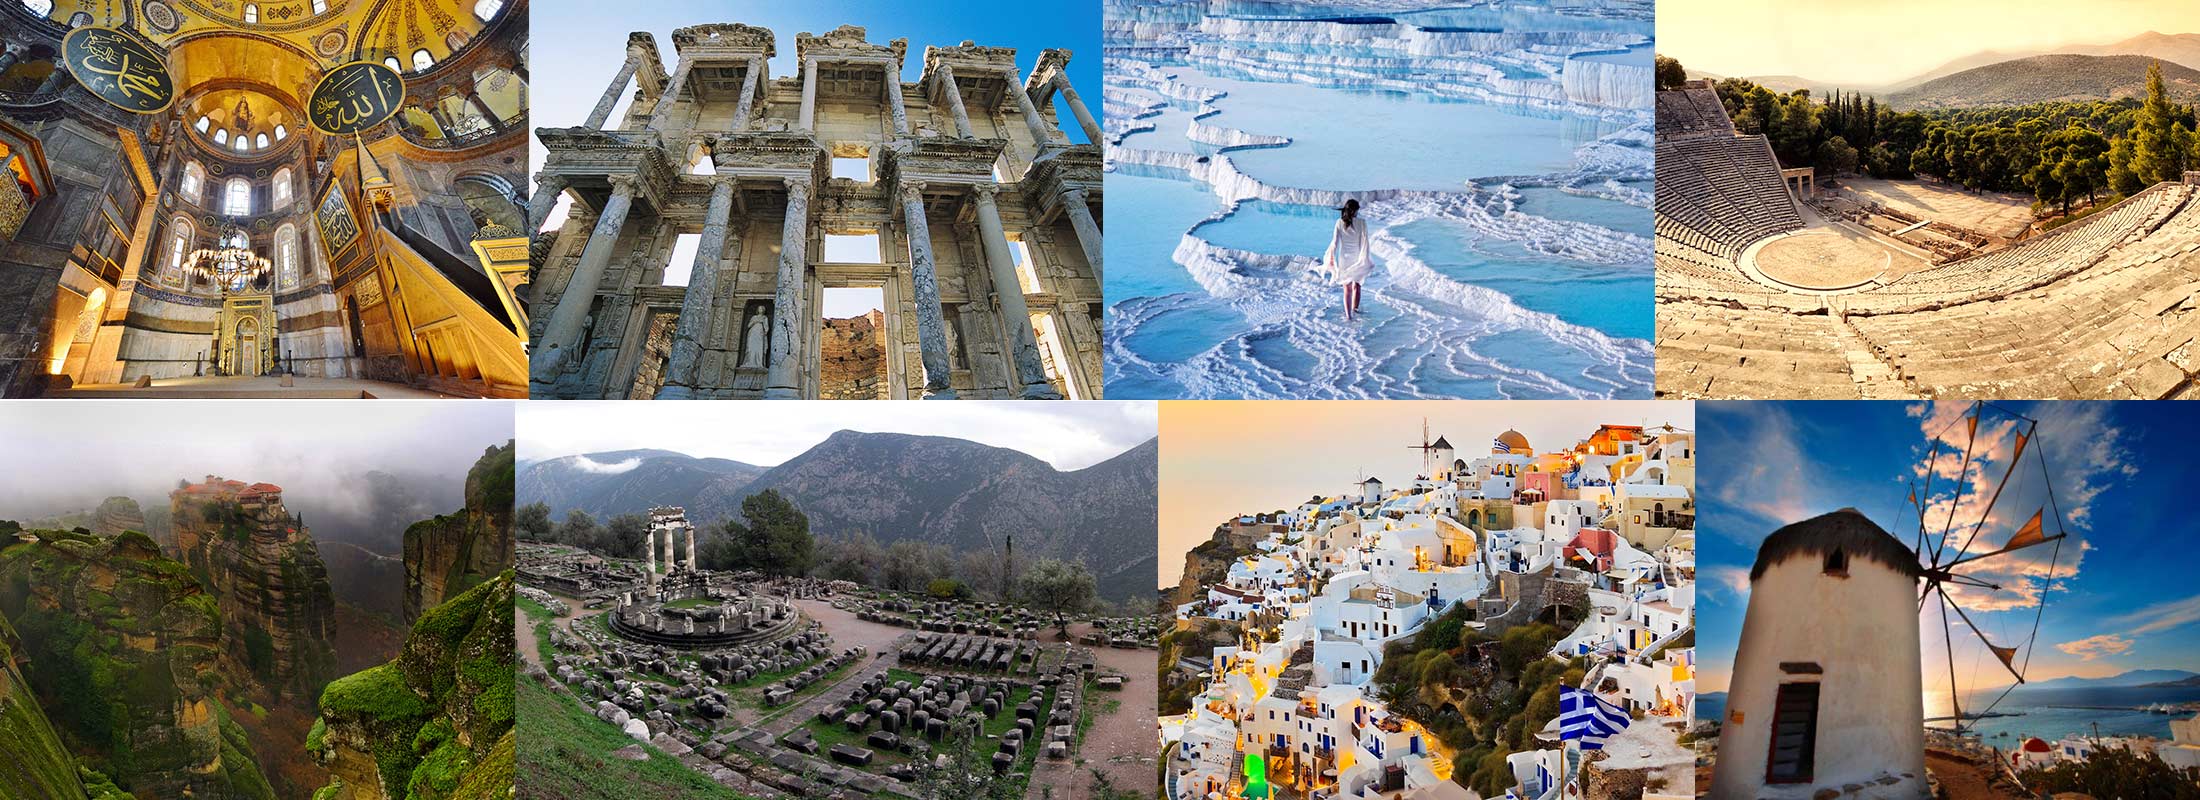 istanbul-ephesus-pamukkale-hierapolis-athens-meteora-delphi-mykonos-santorini-greece-turkey-package-tours